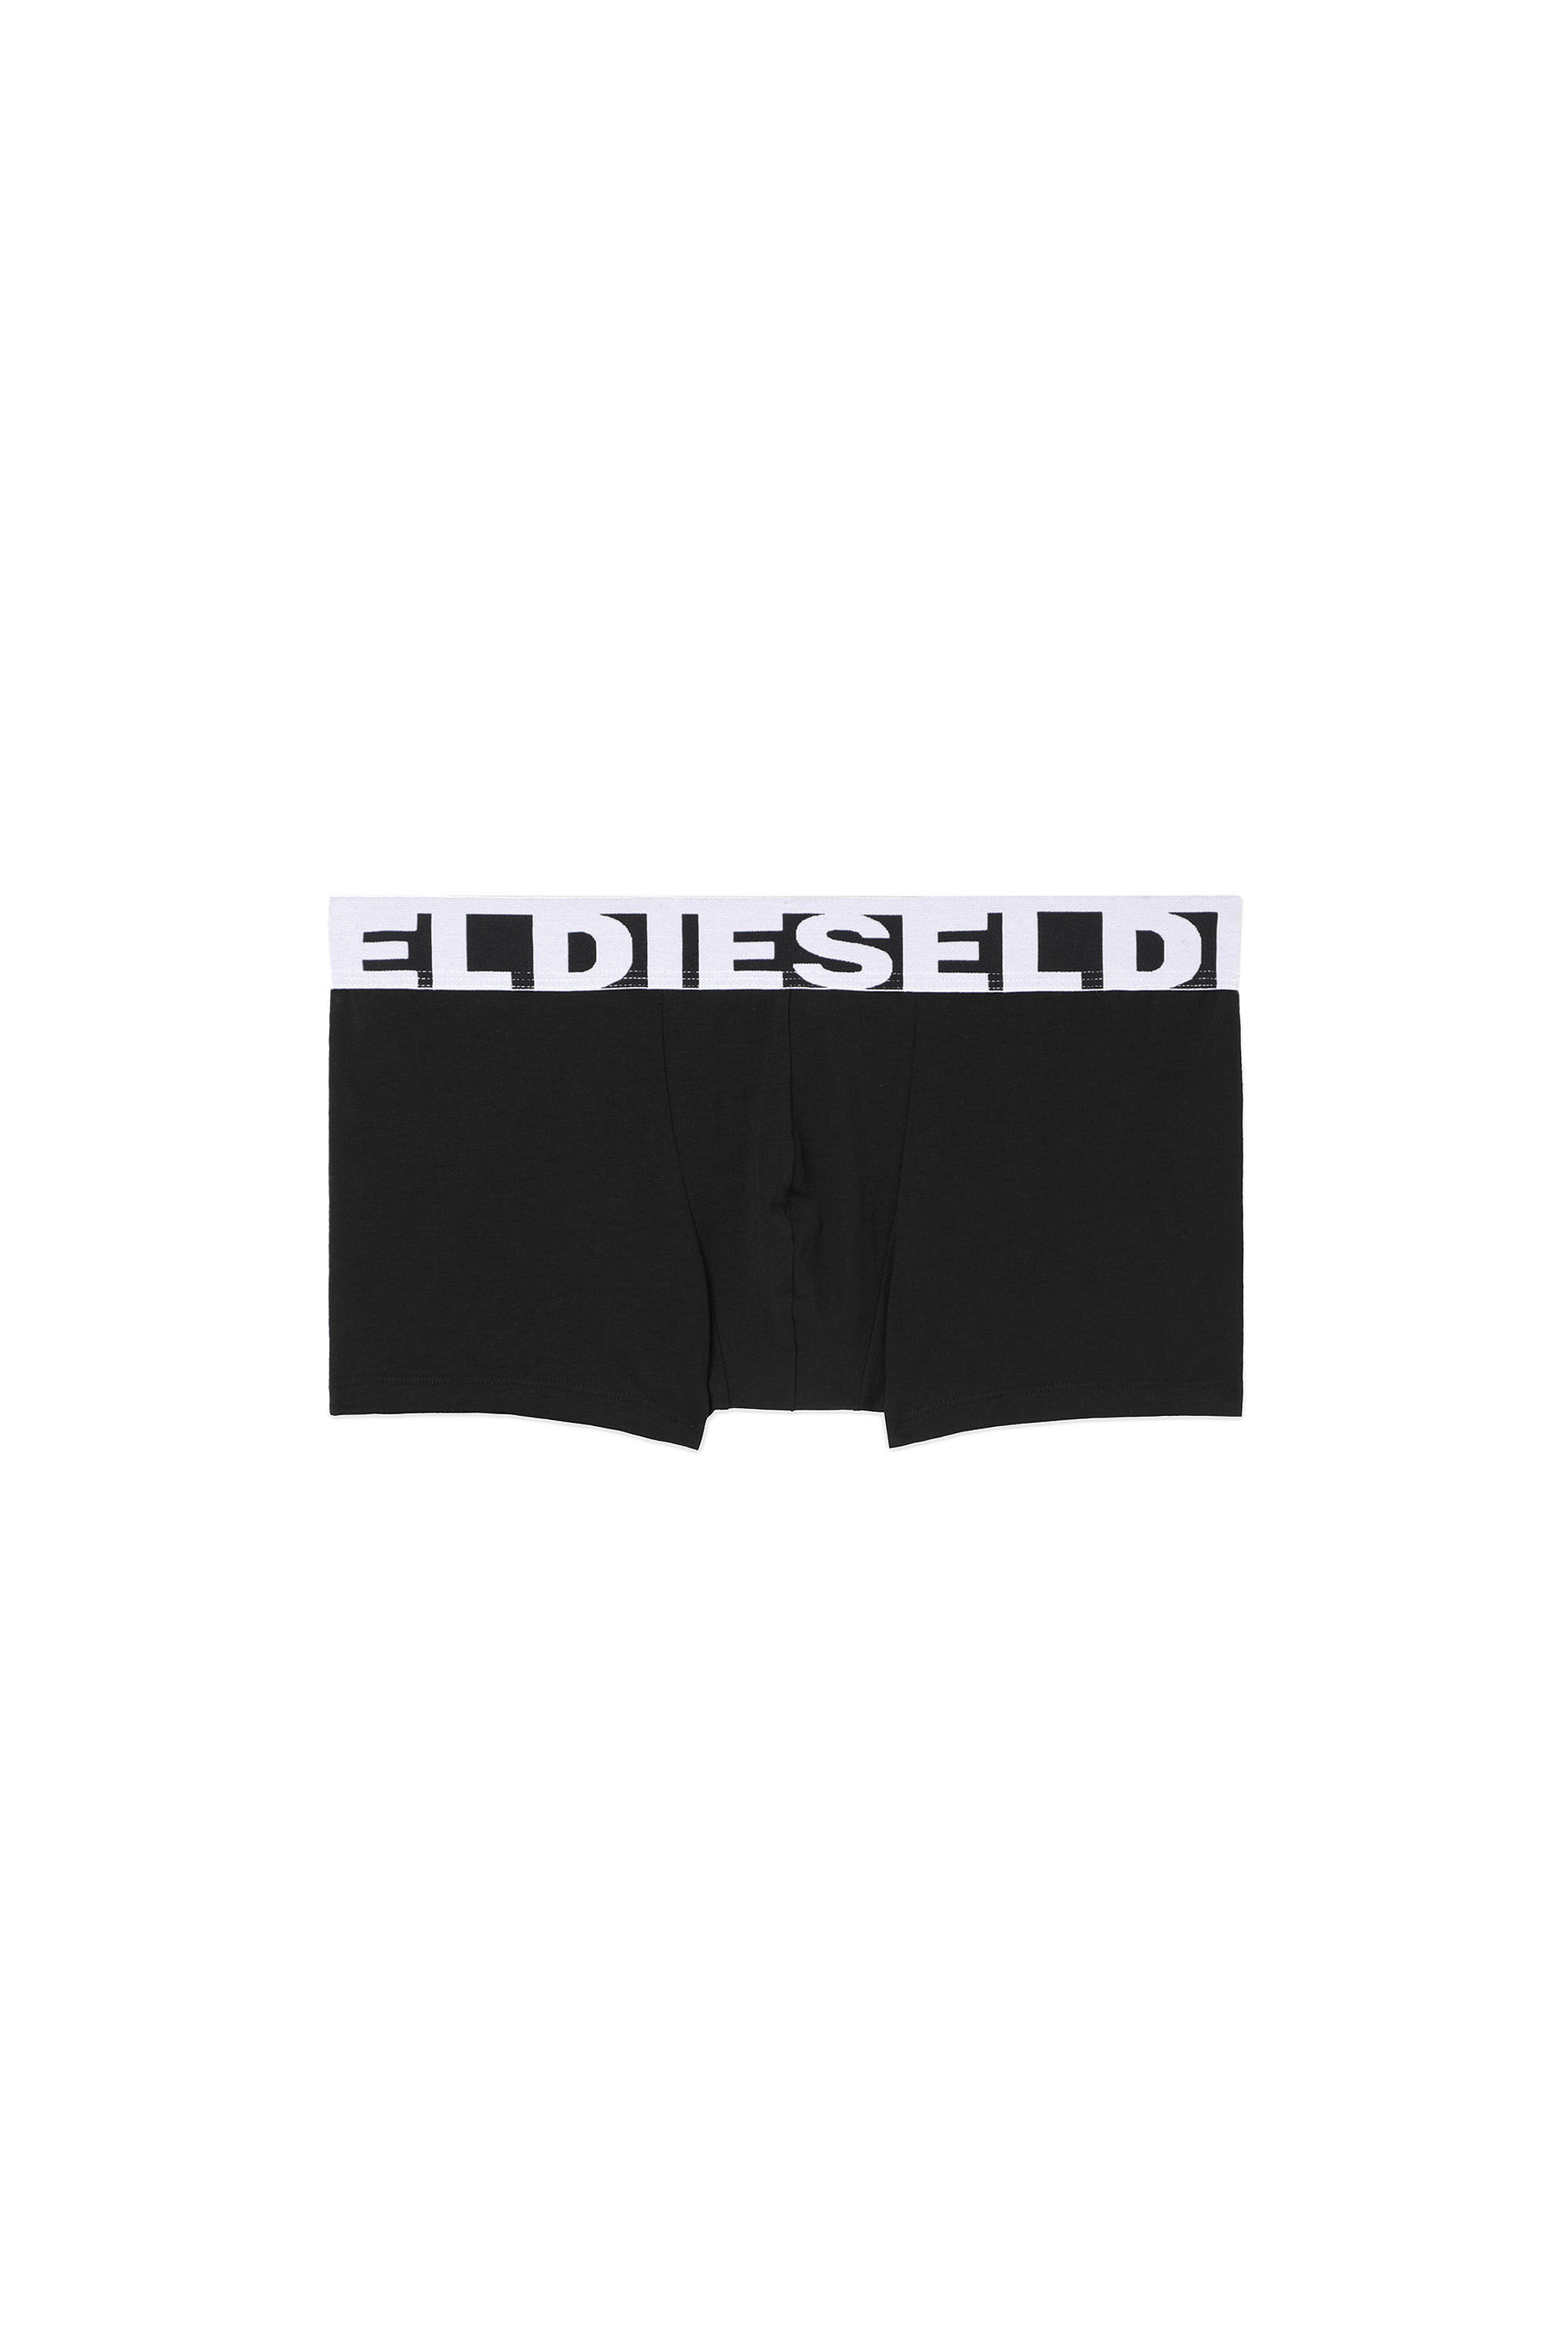 Diesel DSL Cotton Boxer Briefs - White - Black